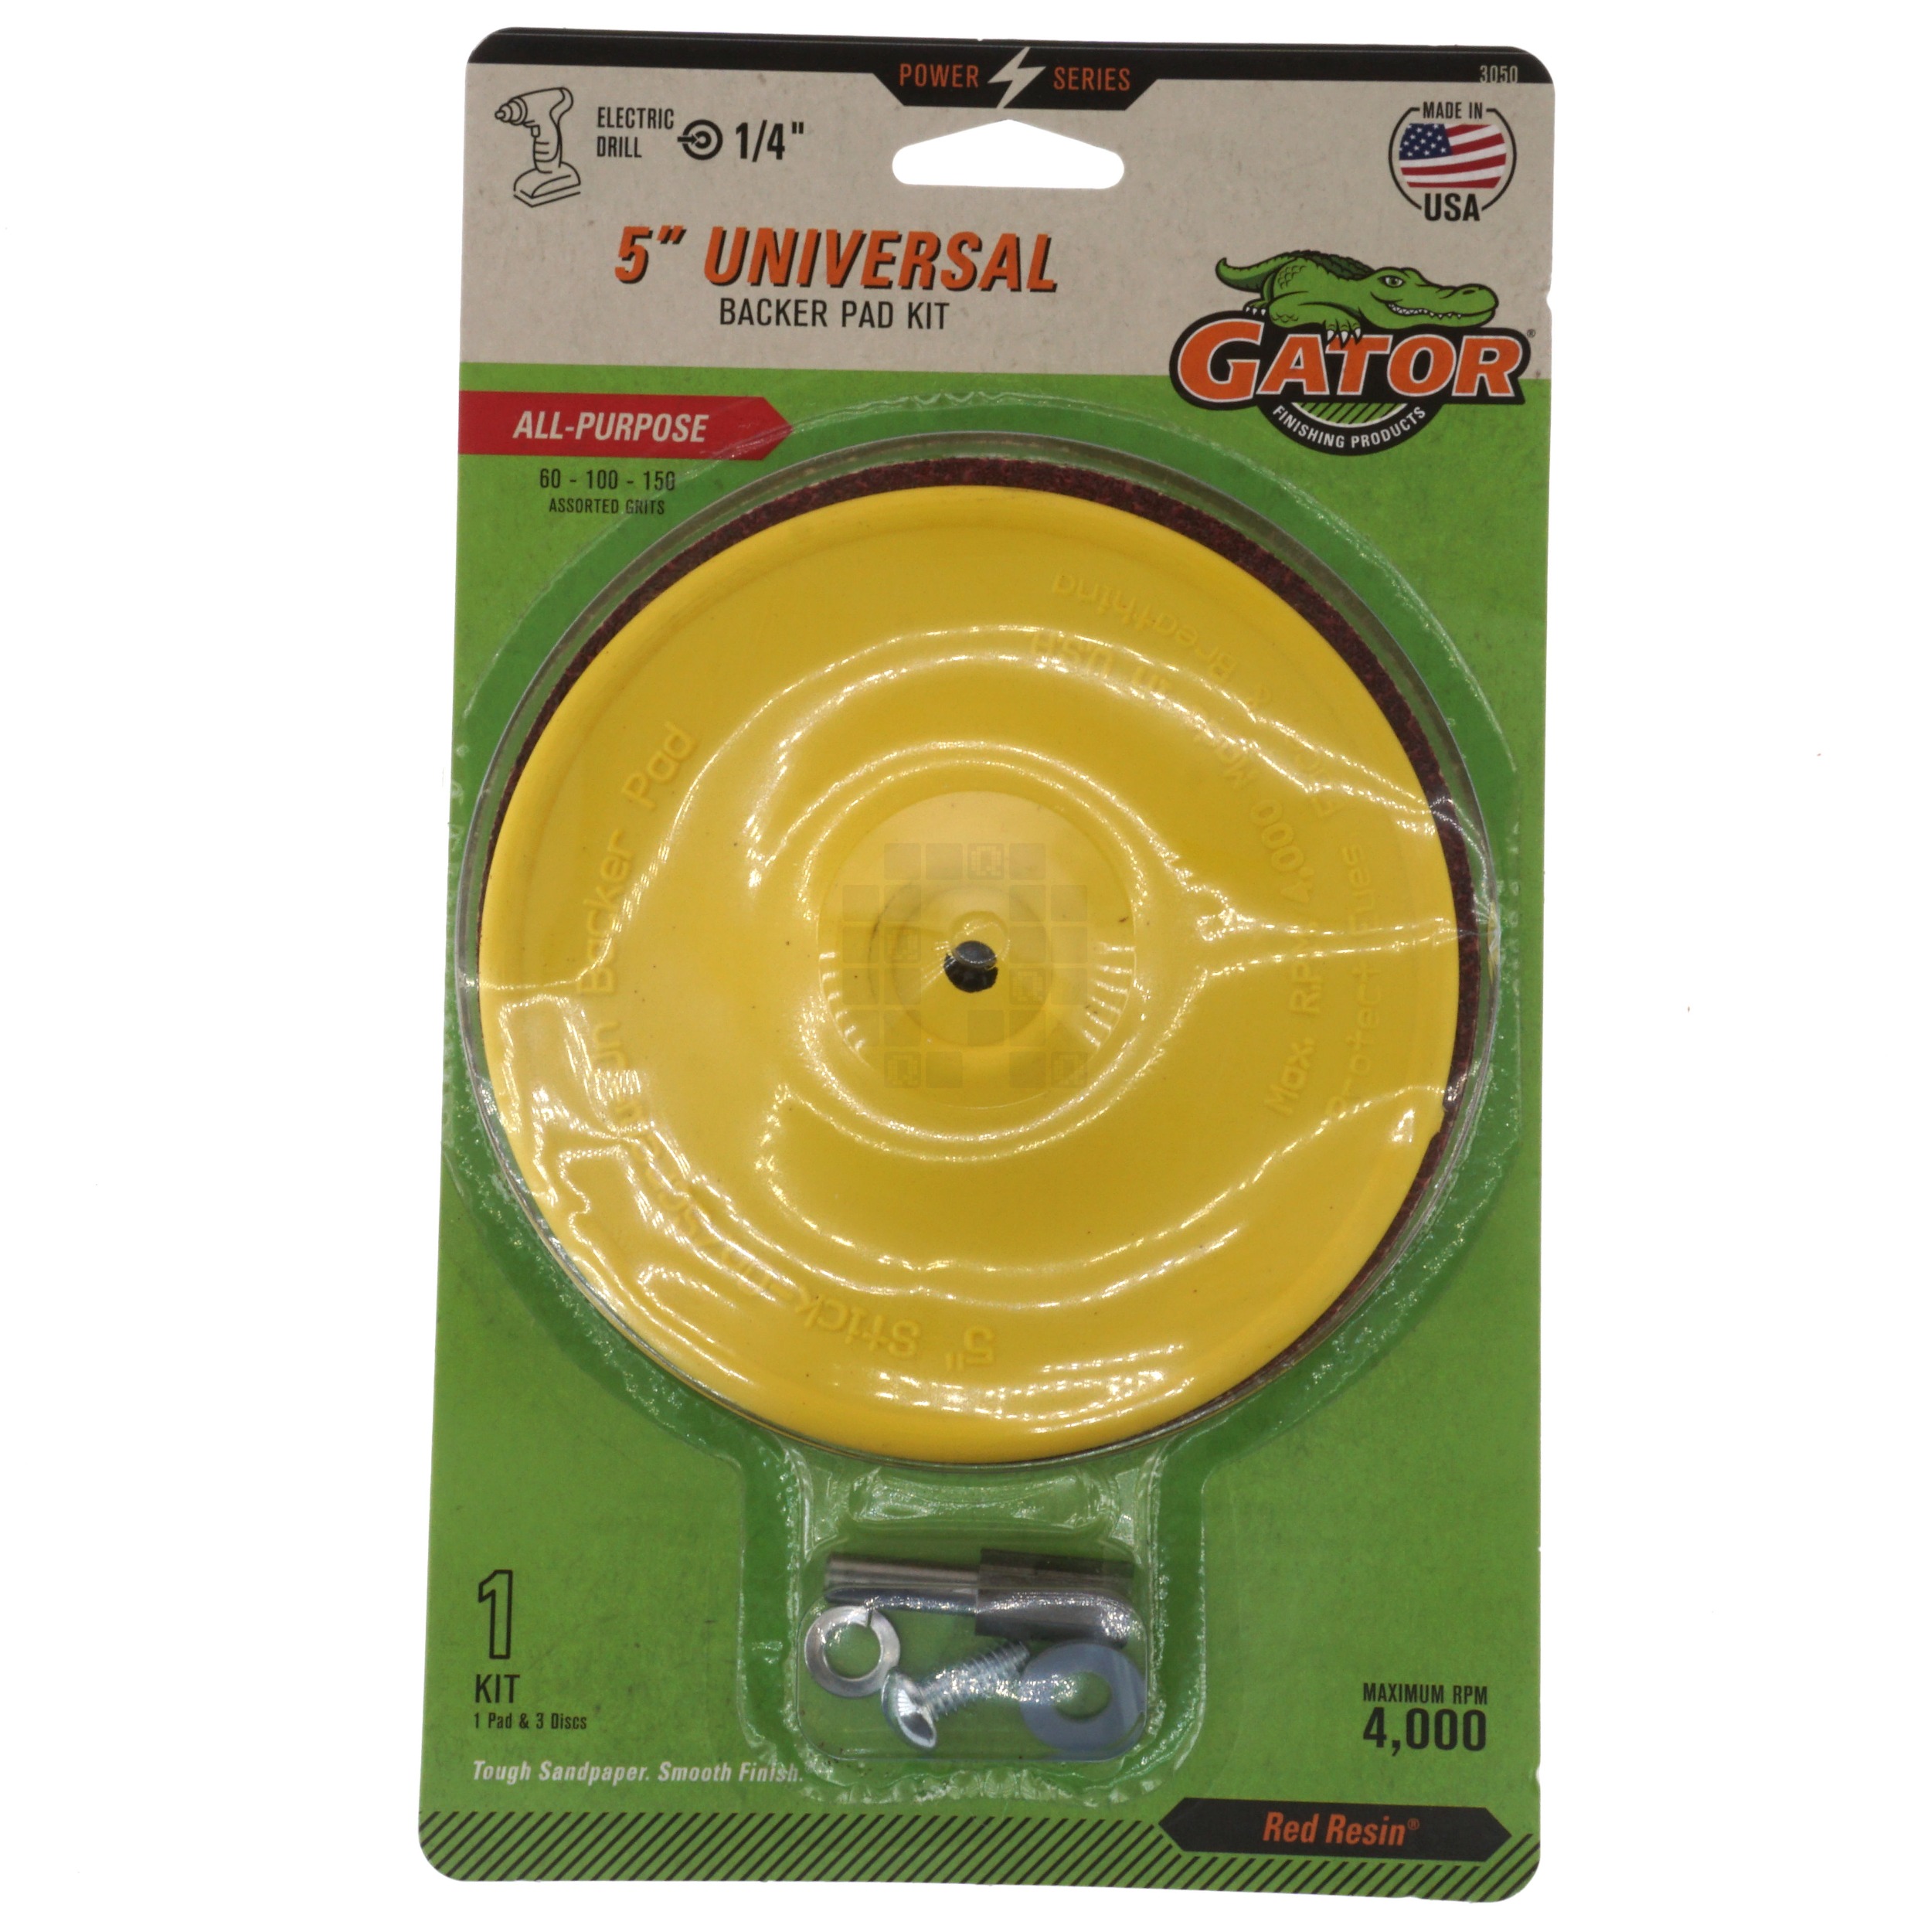 Gator 3050 5" Universal Backer Pad Kit with 60/100/150 Grit Sandpaper